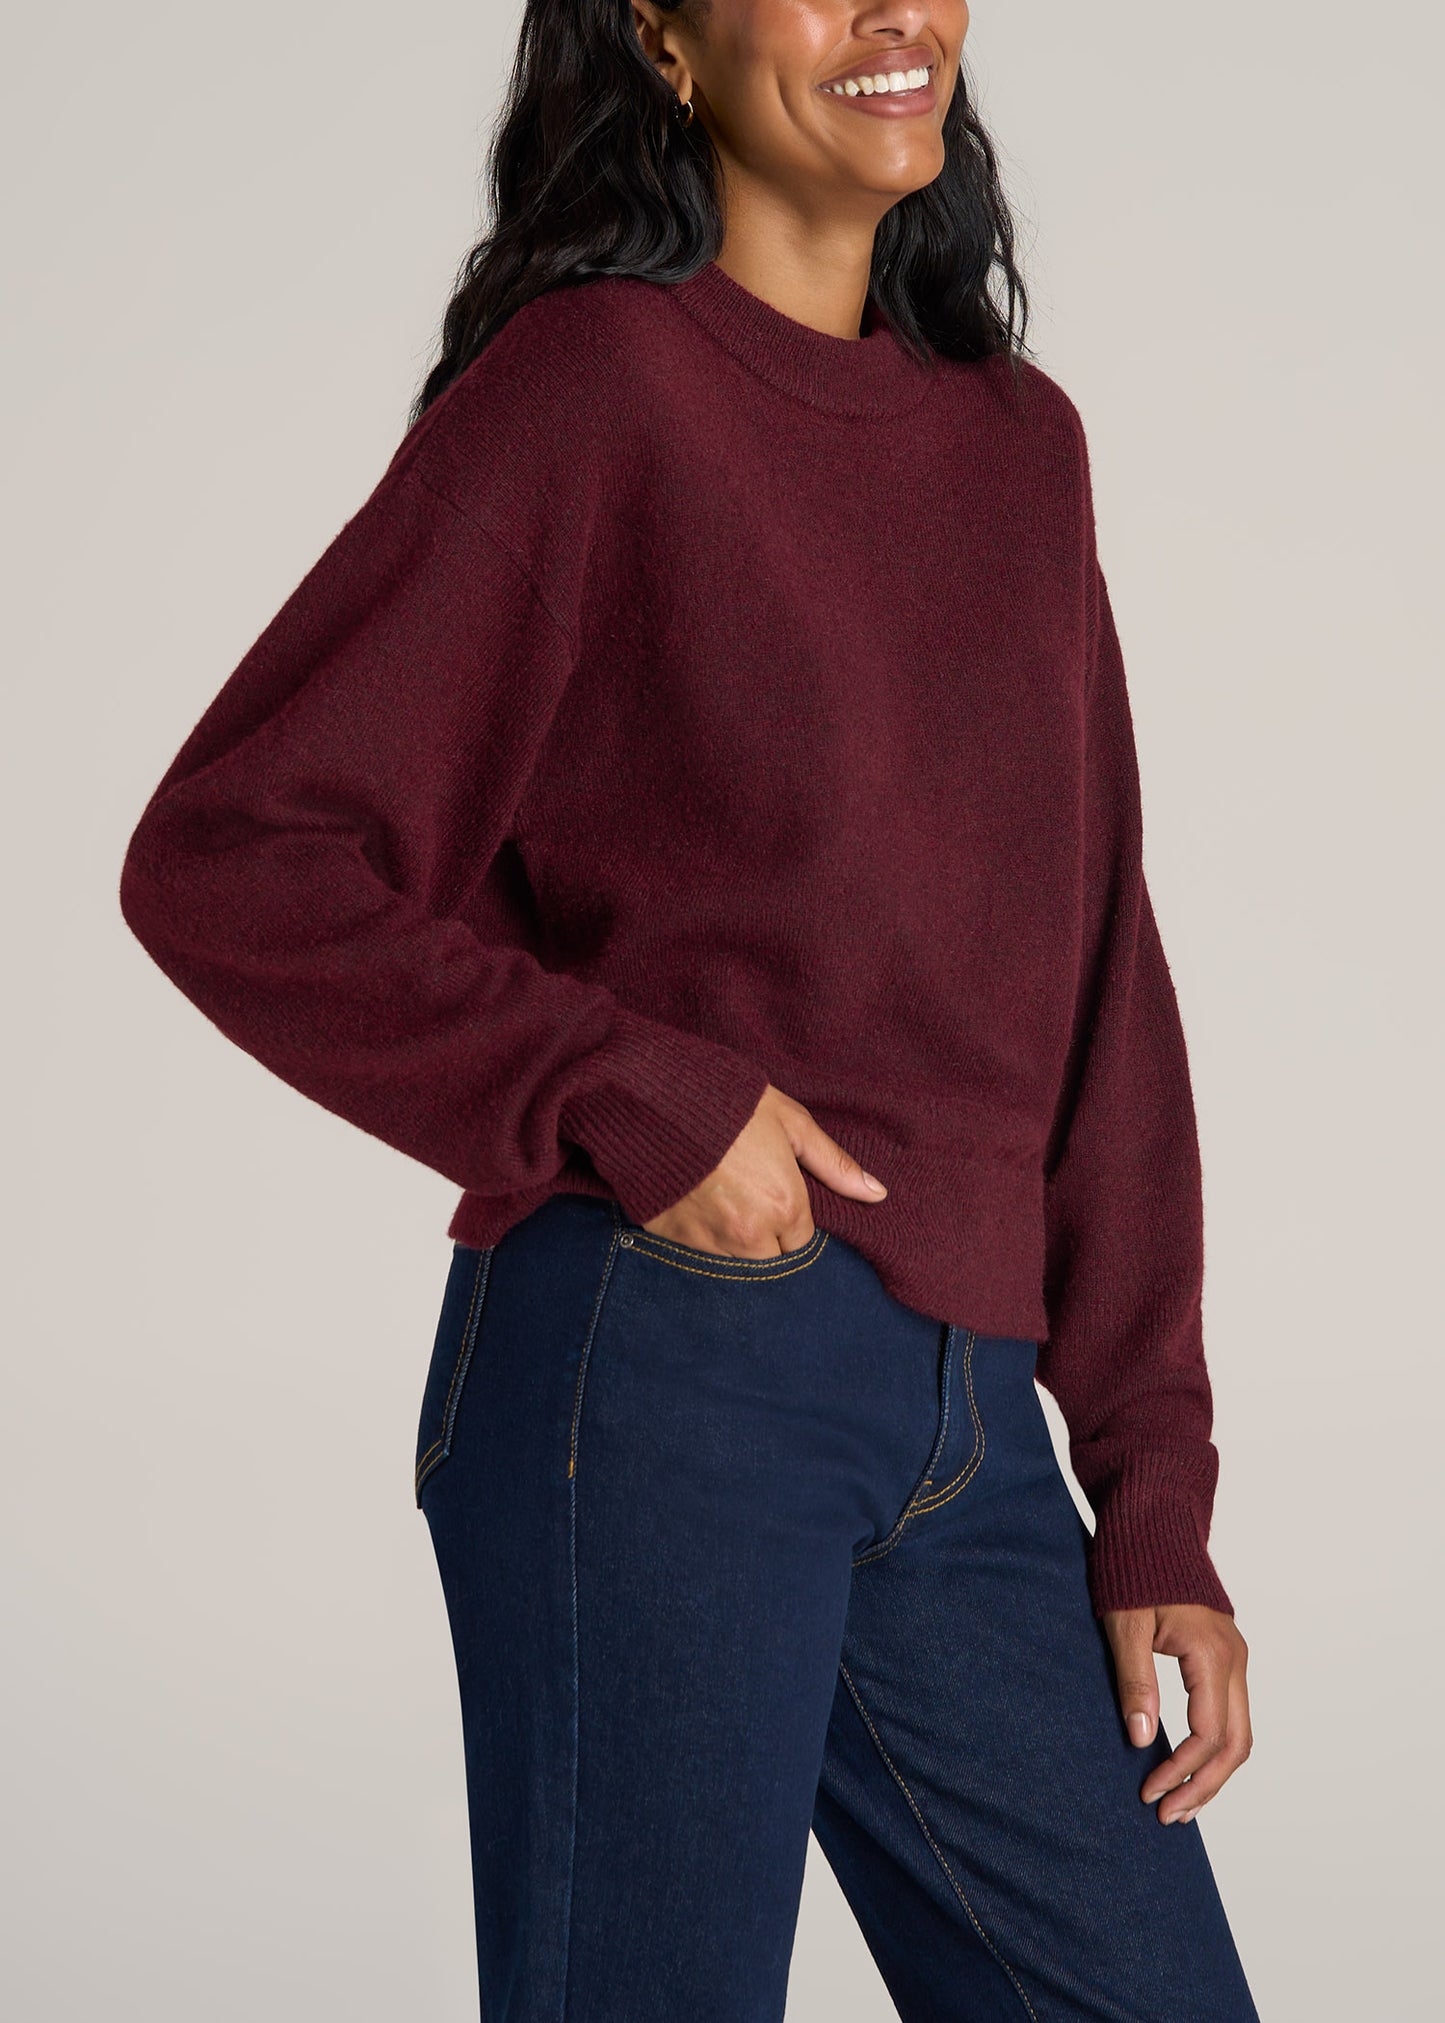 American-Tall-Women-Relaxed-Crewneck-Wool-blend-Sweater-Dark-Cherry-side